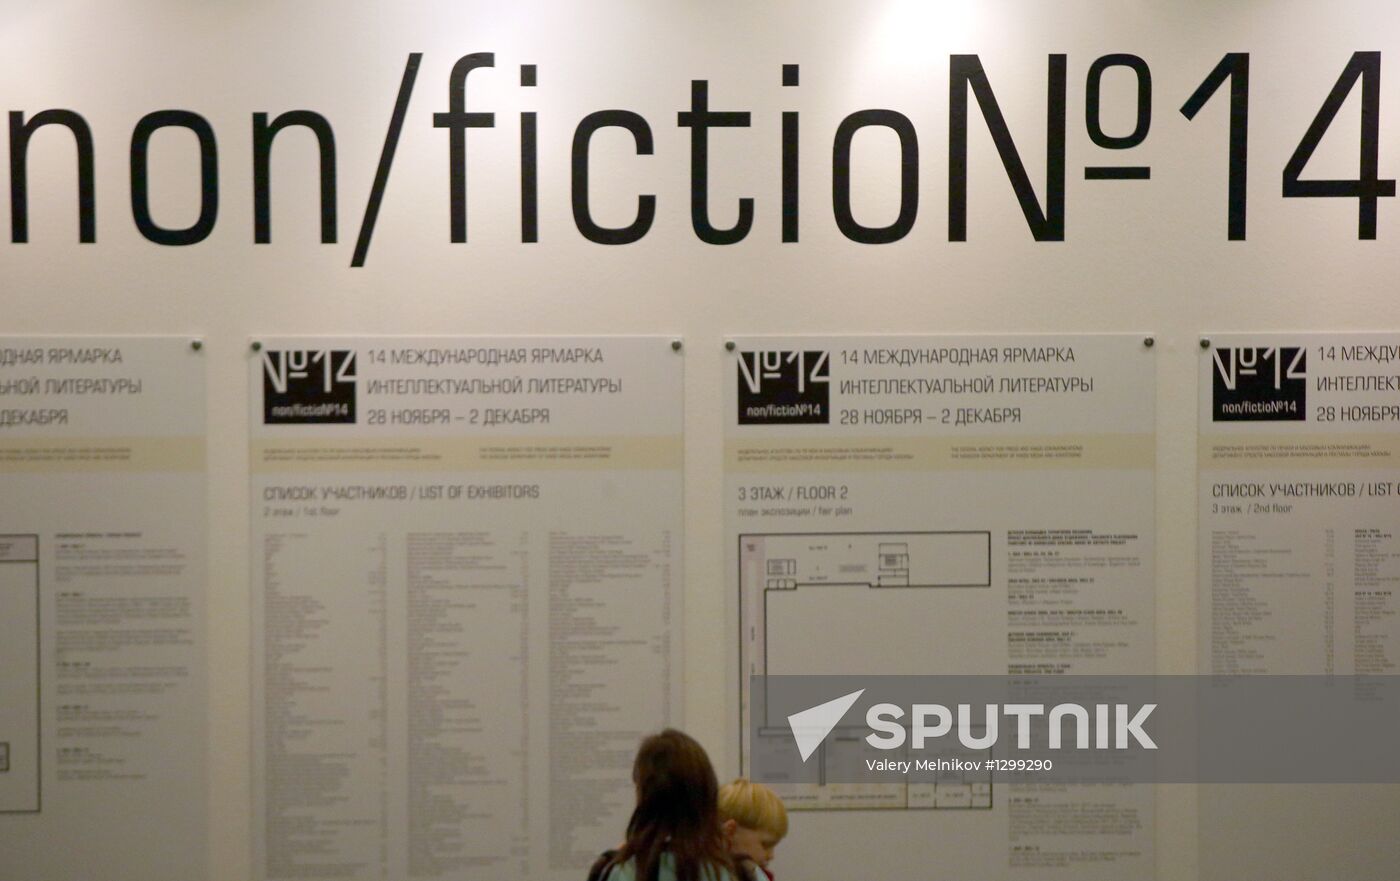 Non/Fiction No14 fair of intellectual literature opens